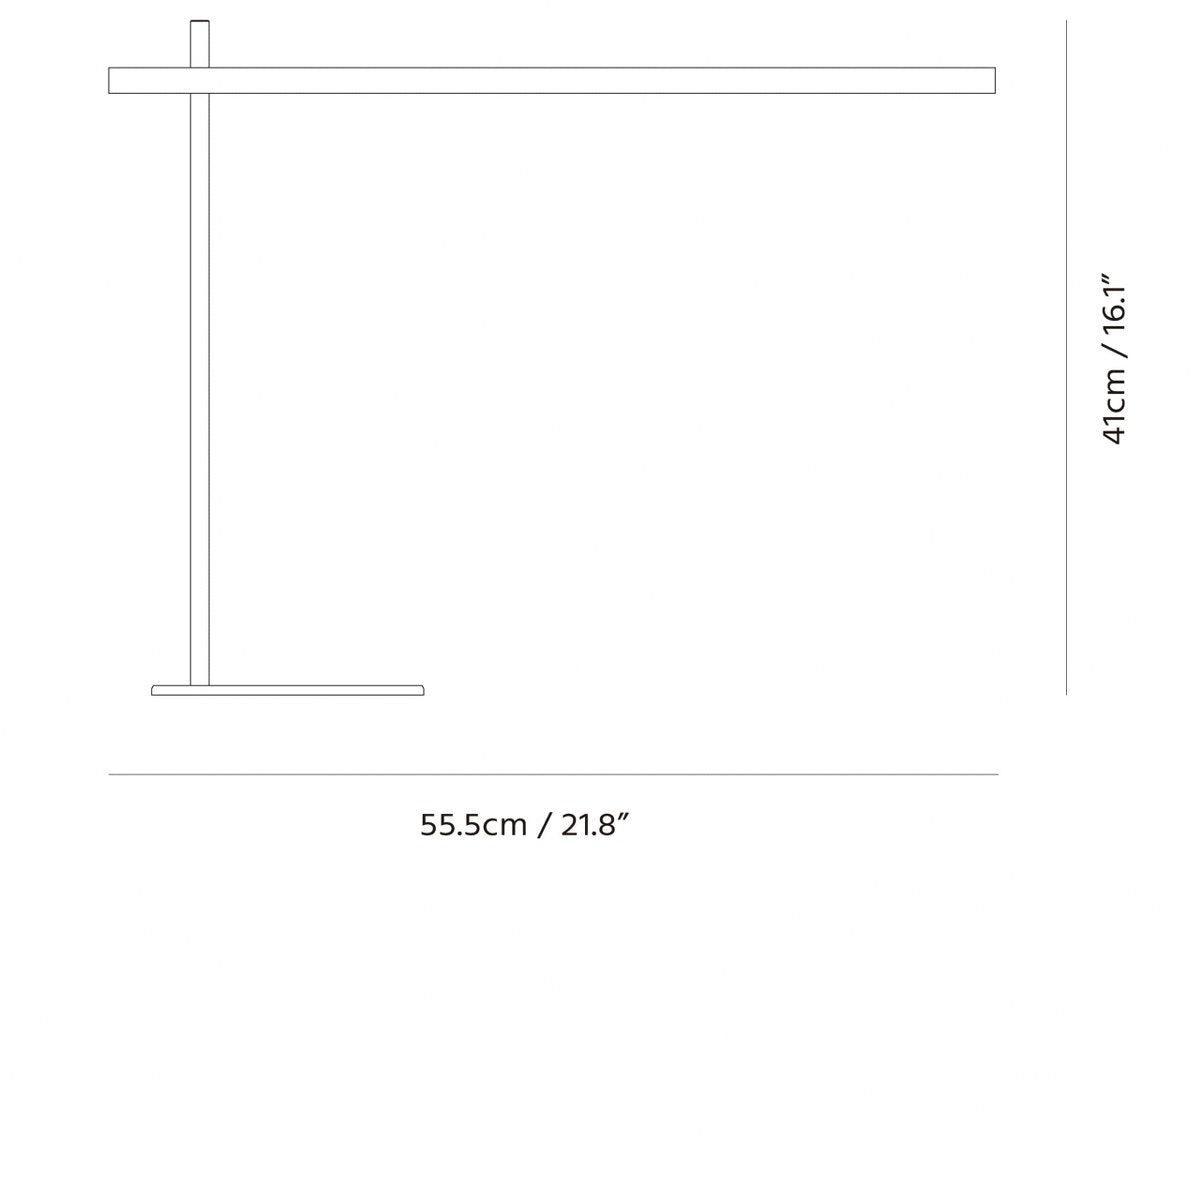 Seed Design - TickTock Table Lamp - SLD-393DP6-BK | Montreal Lighting & Hardware